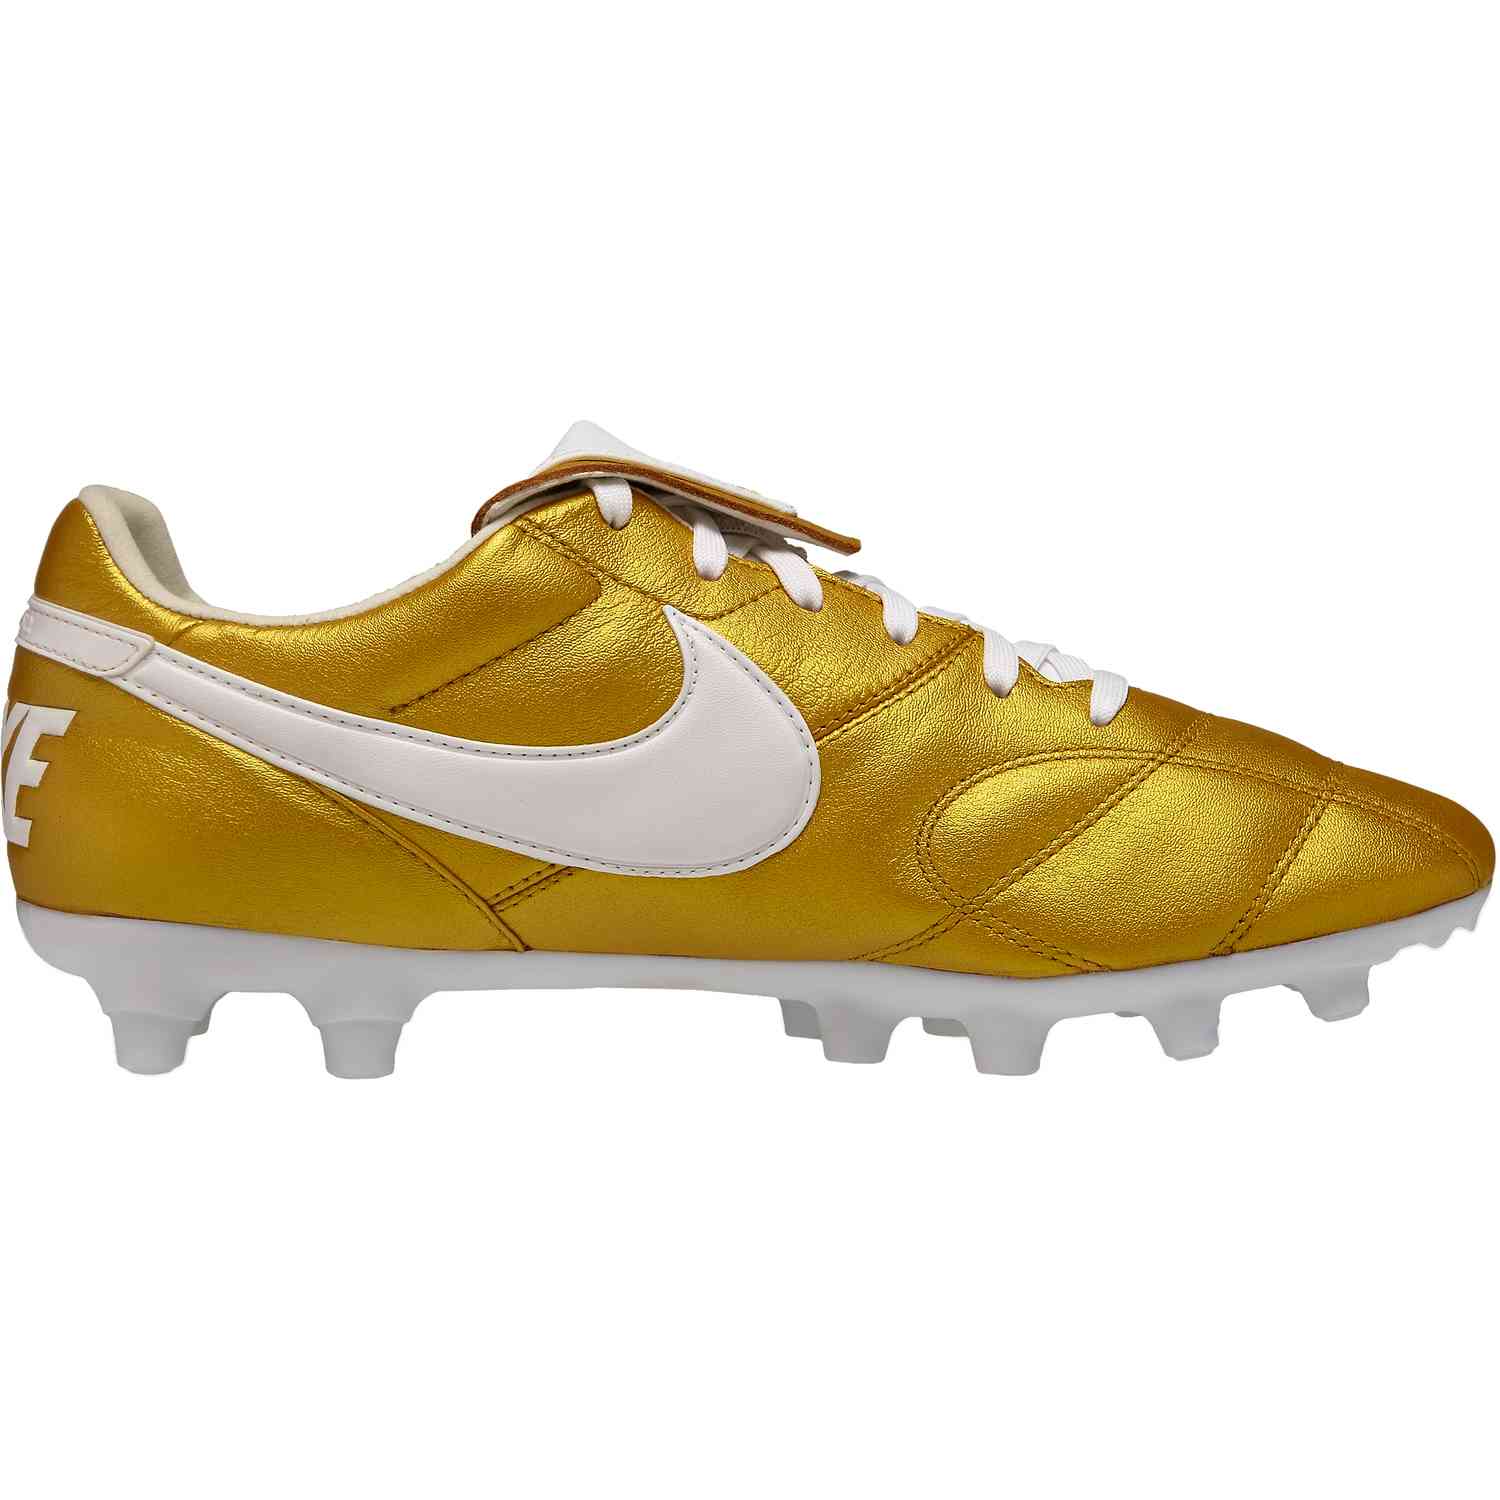 The Nike Premier Ii Fg Metallic Vivid Gold White Soccerpro